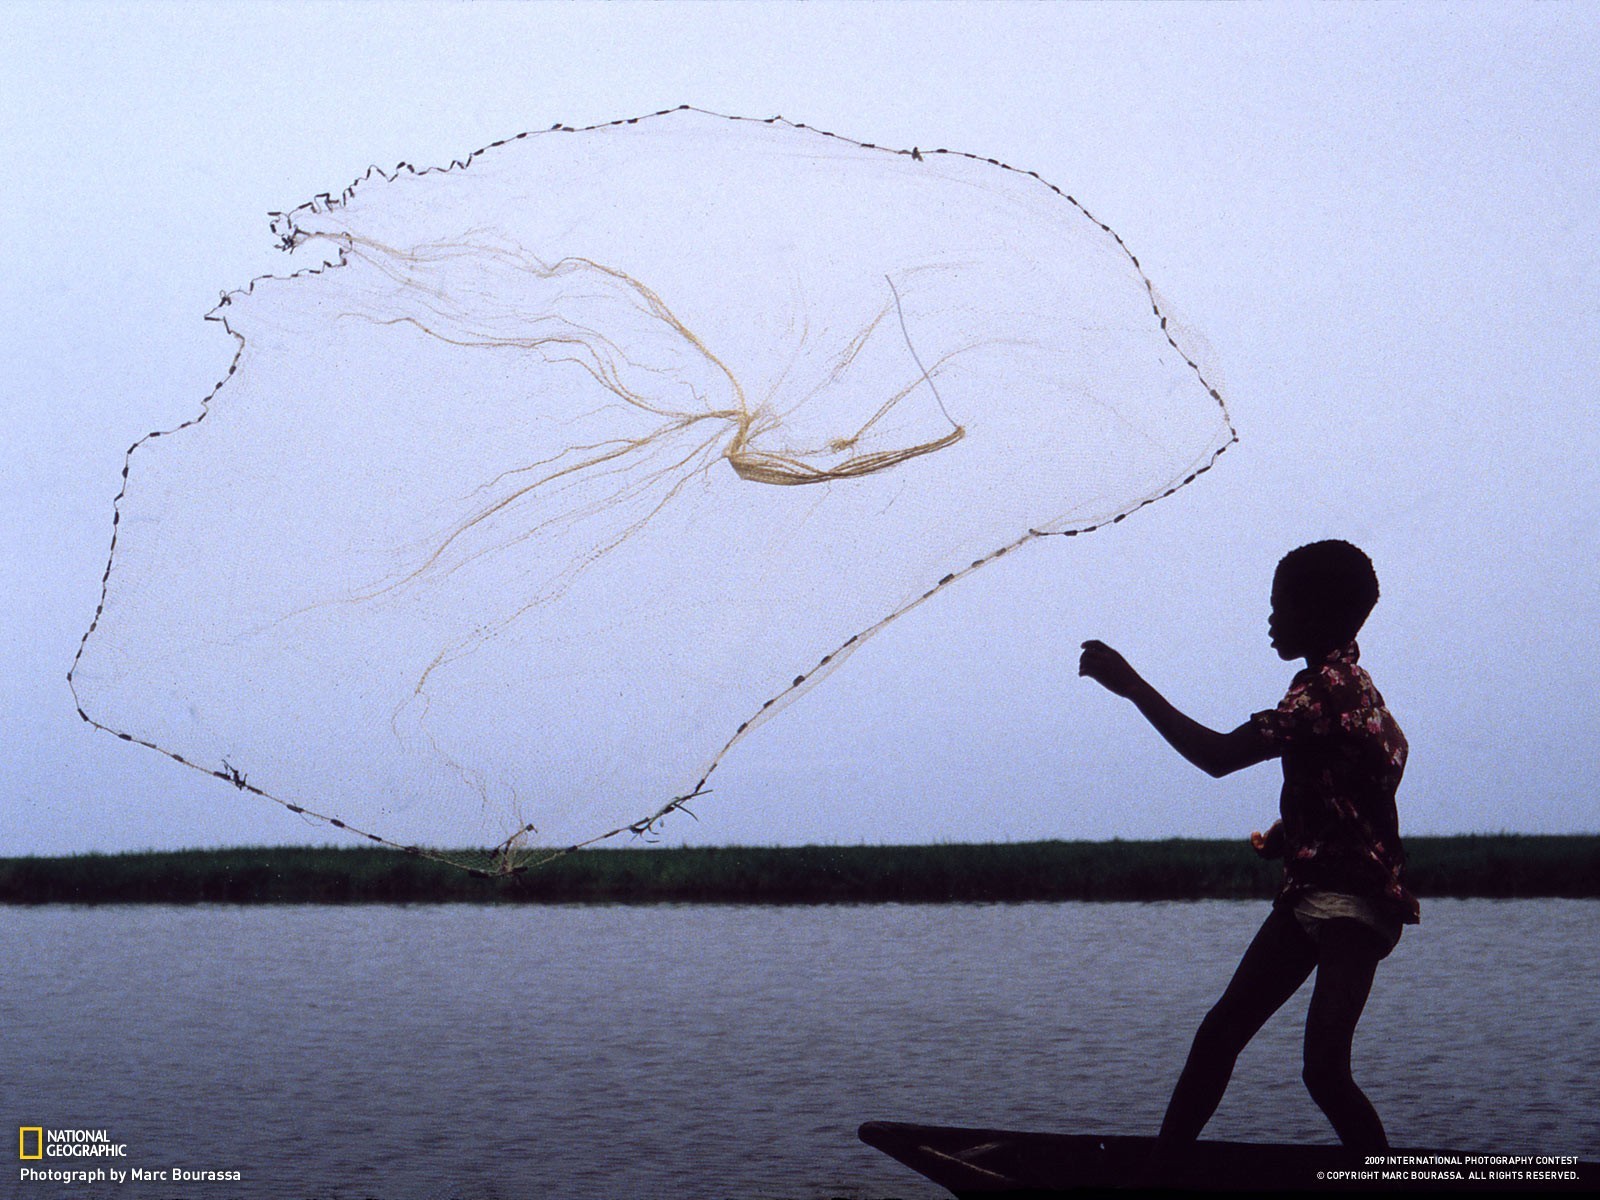 General 1600x1200 National Geographic children fishing 2009 (Year) outdoors fishing net